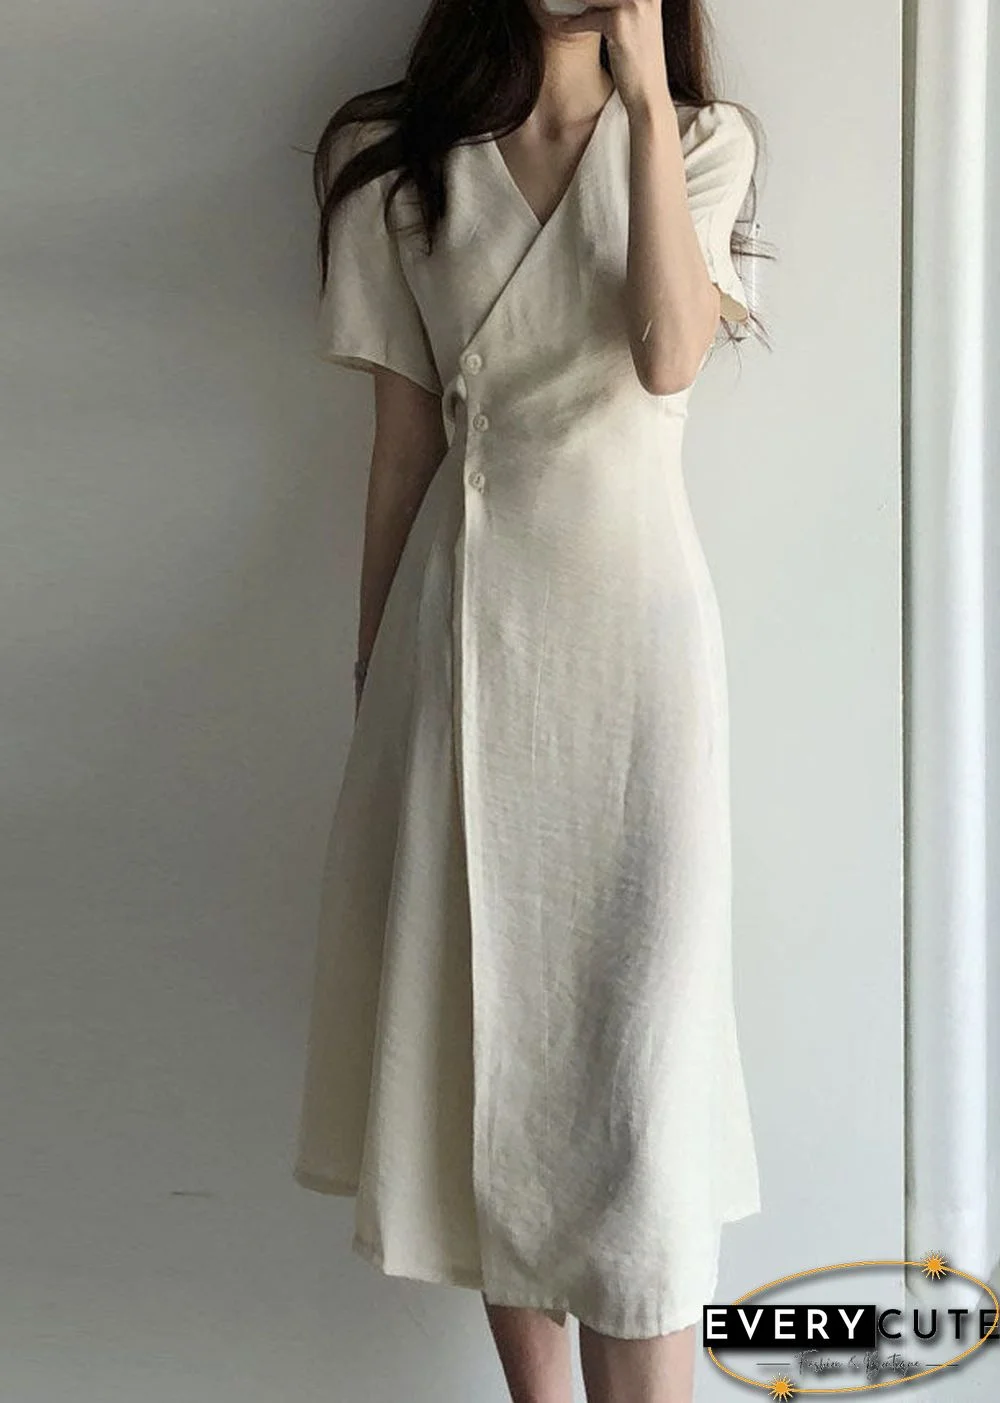 Boutique Beige V Neck fashion Cotton Long Dresses Short Sleeve